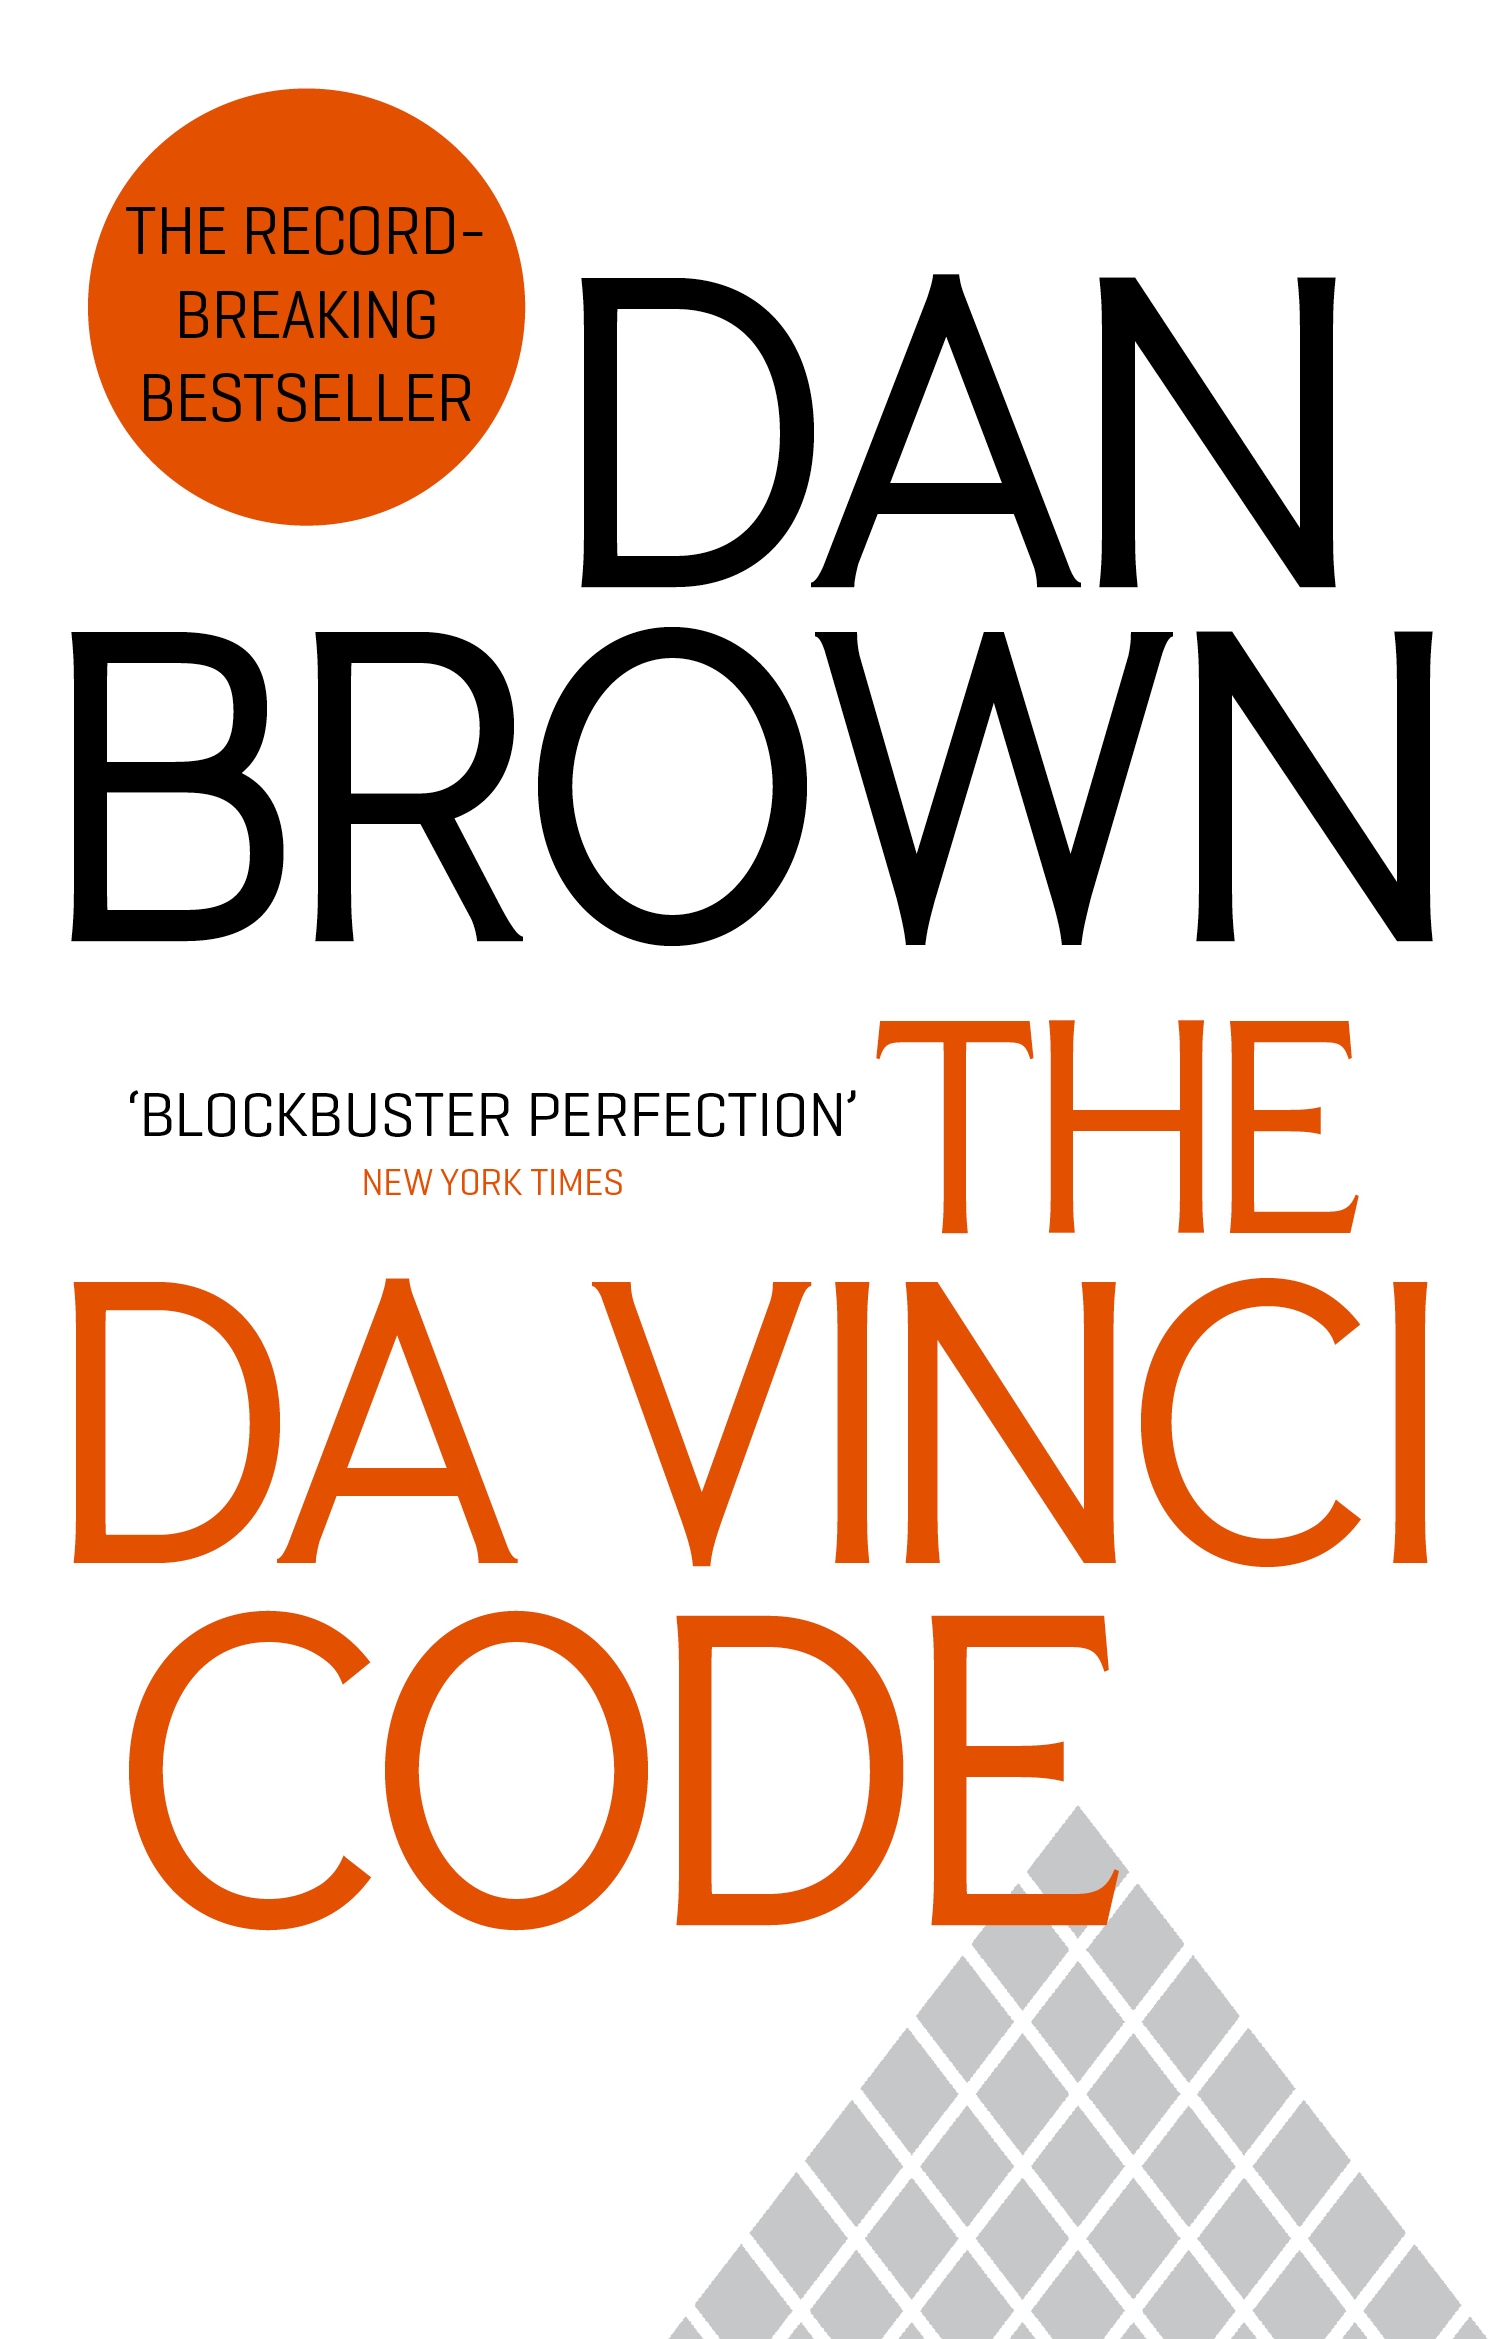 2018 book by author of da vinci code